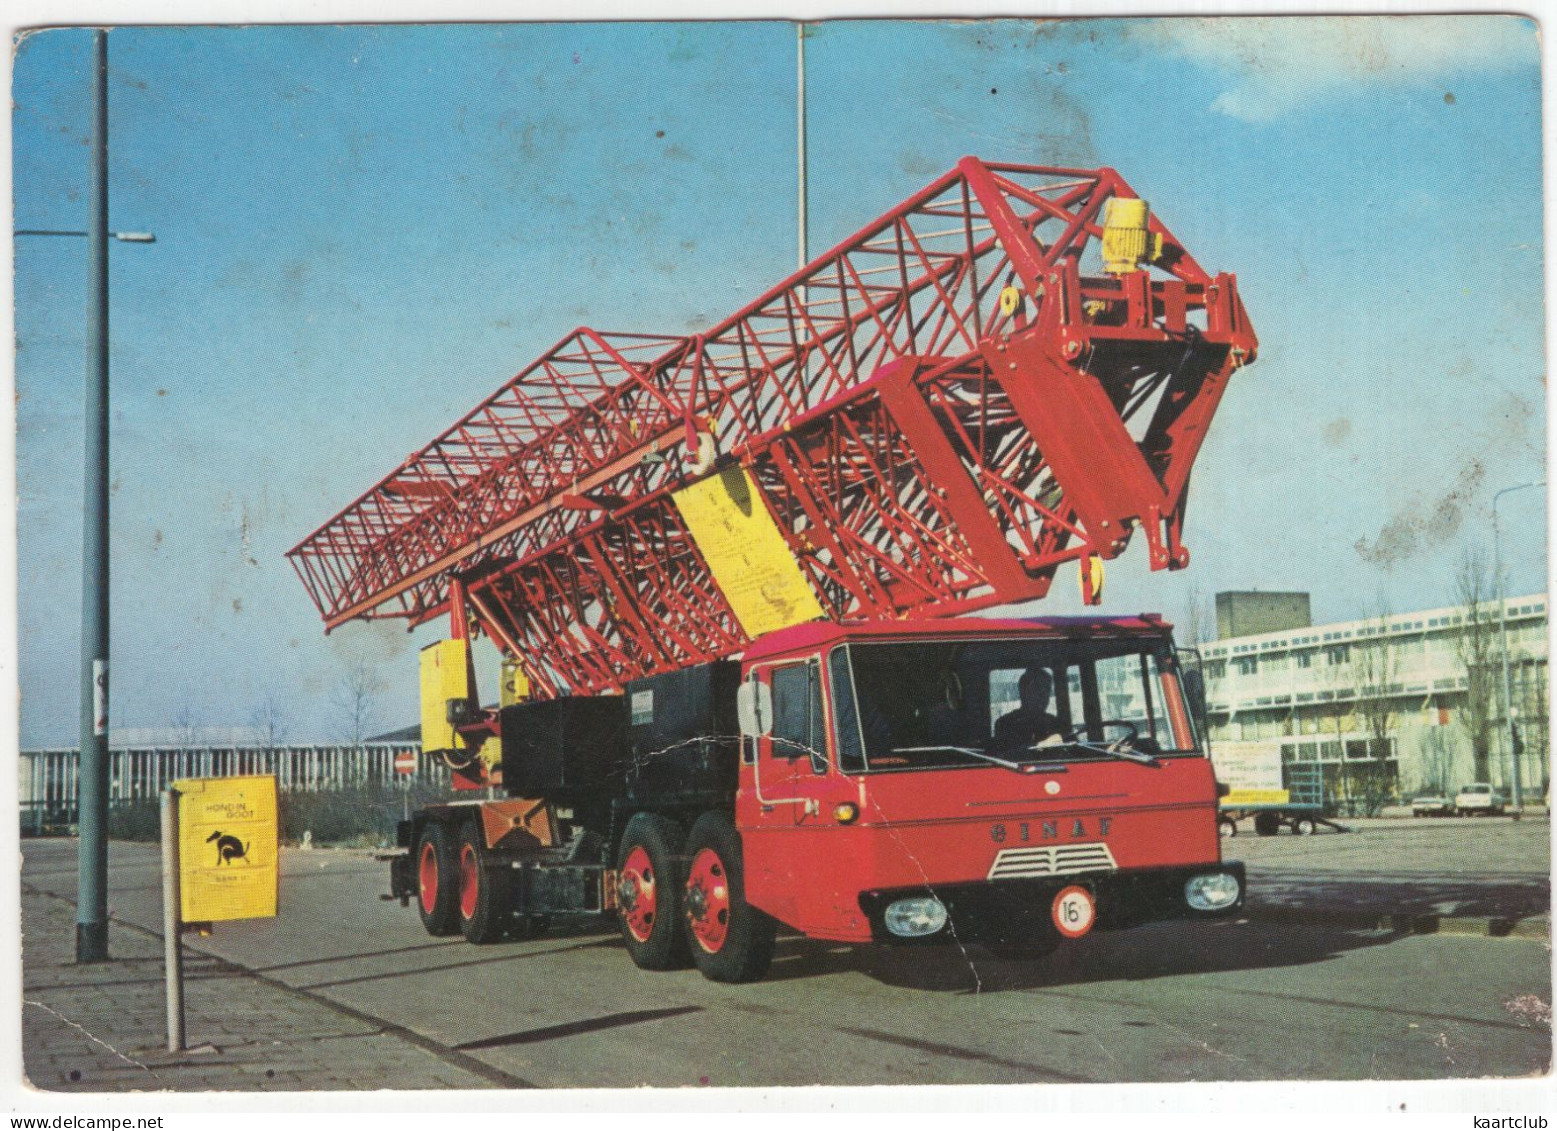 KRØLL K35 LOOPKATKRAAN Op GINAF TRUCKCHASSIS 8x6 - (Niertrasz NV, Bouwmachines, Amsterdam) - Vrachtwagens En LGV